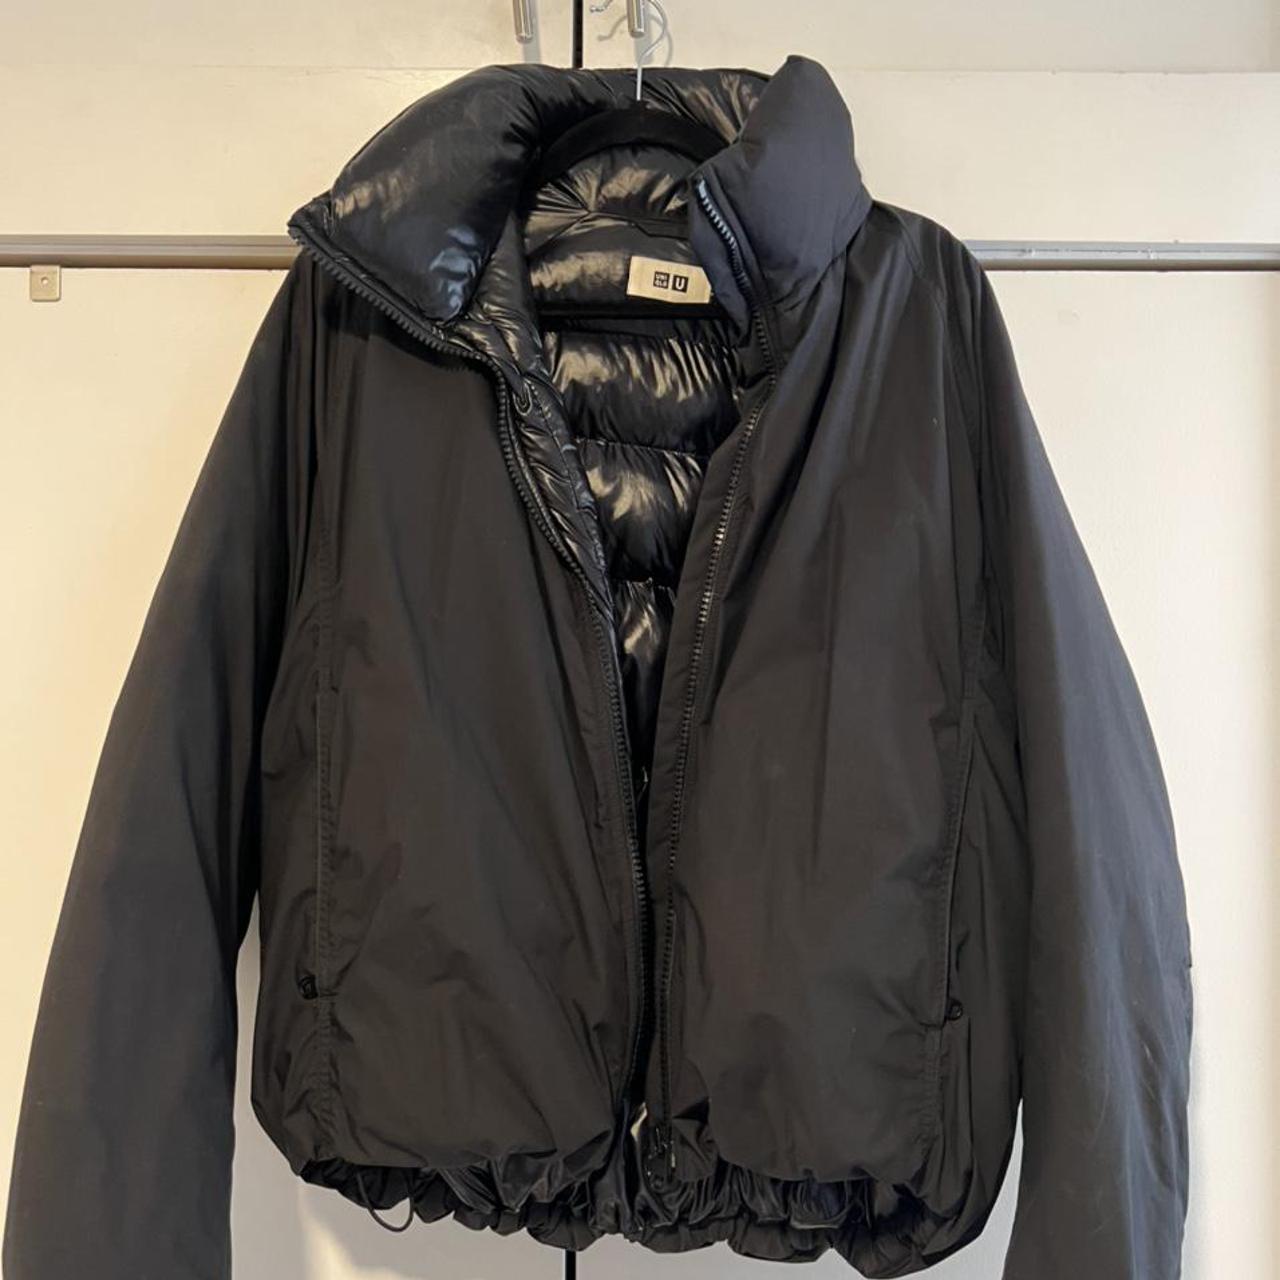 YZY GAP-styled black puffer jacket from the Uniqlo U... - Depop